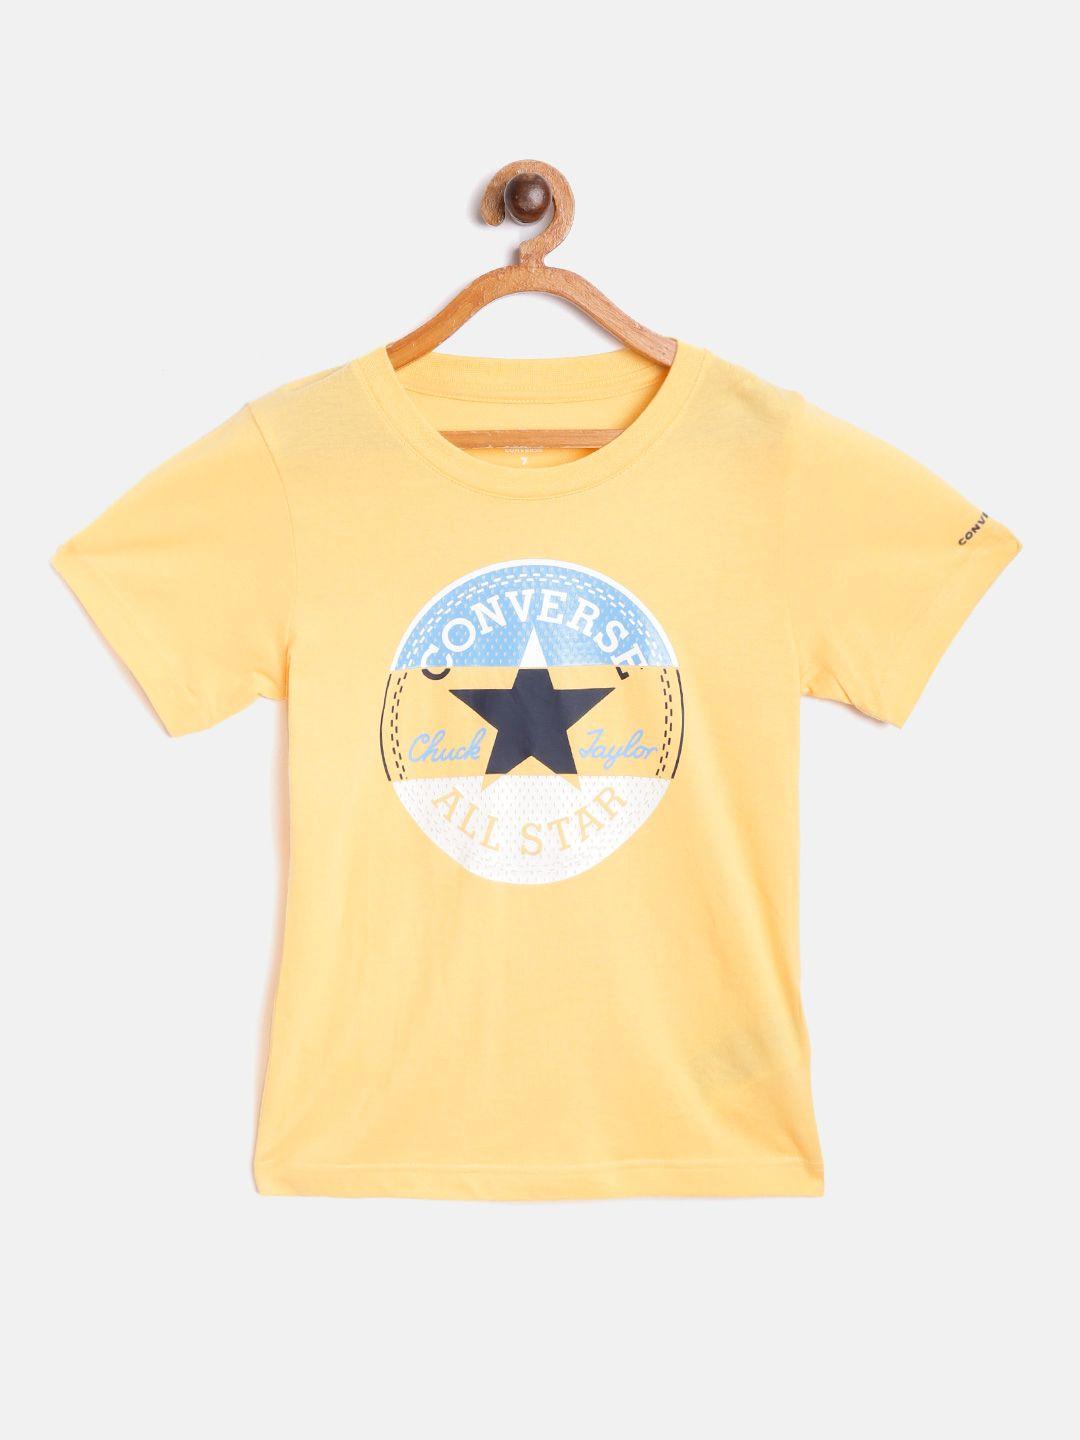 converse boys yellow  blue pure cotton brand logo printed round neck pure cotton t-shirt